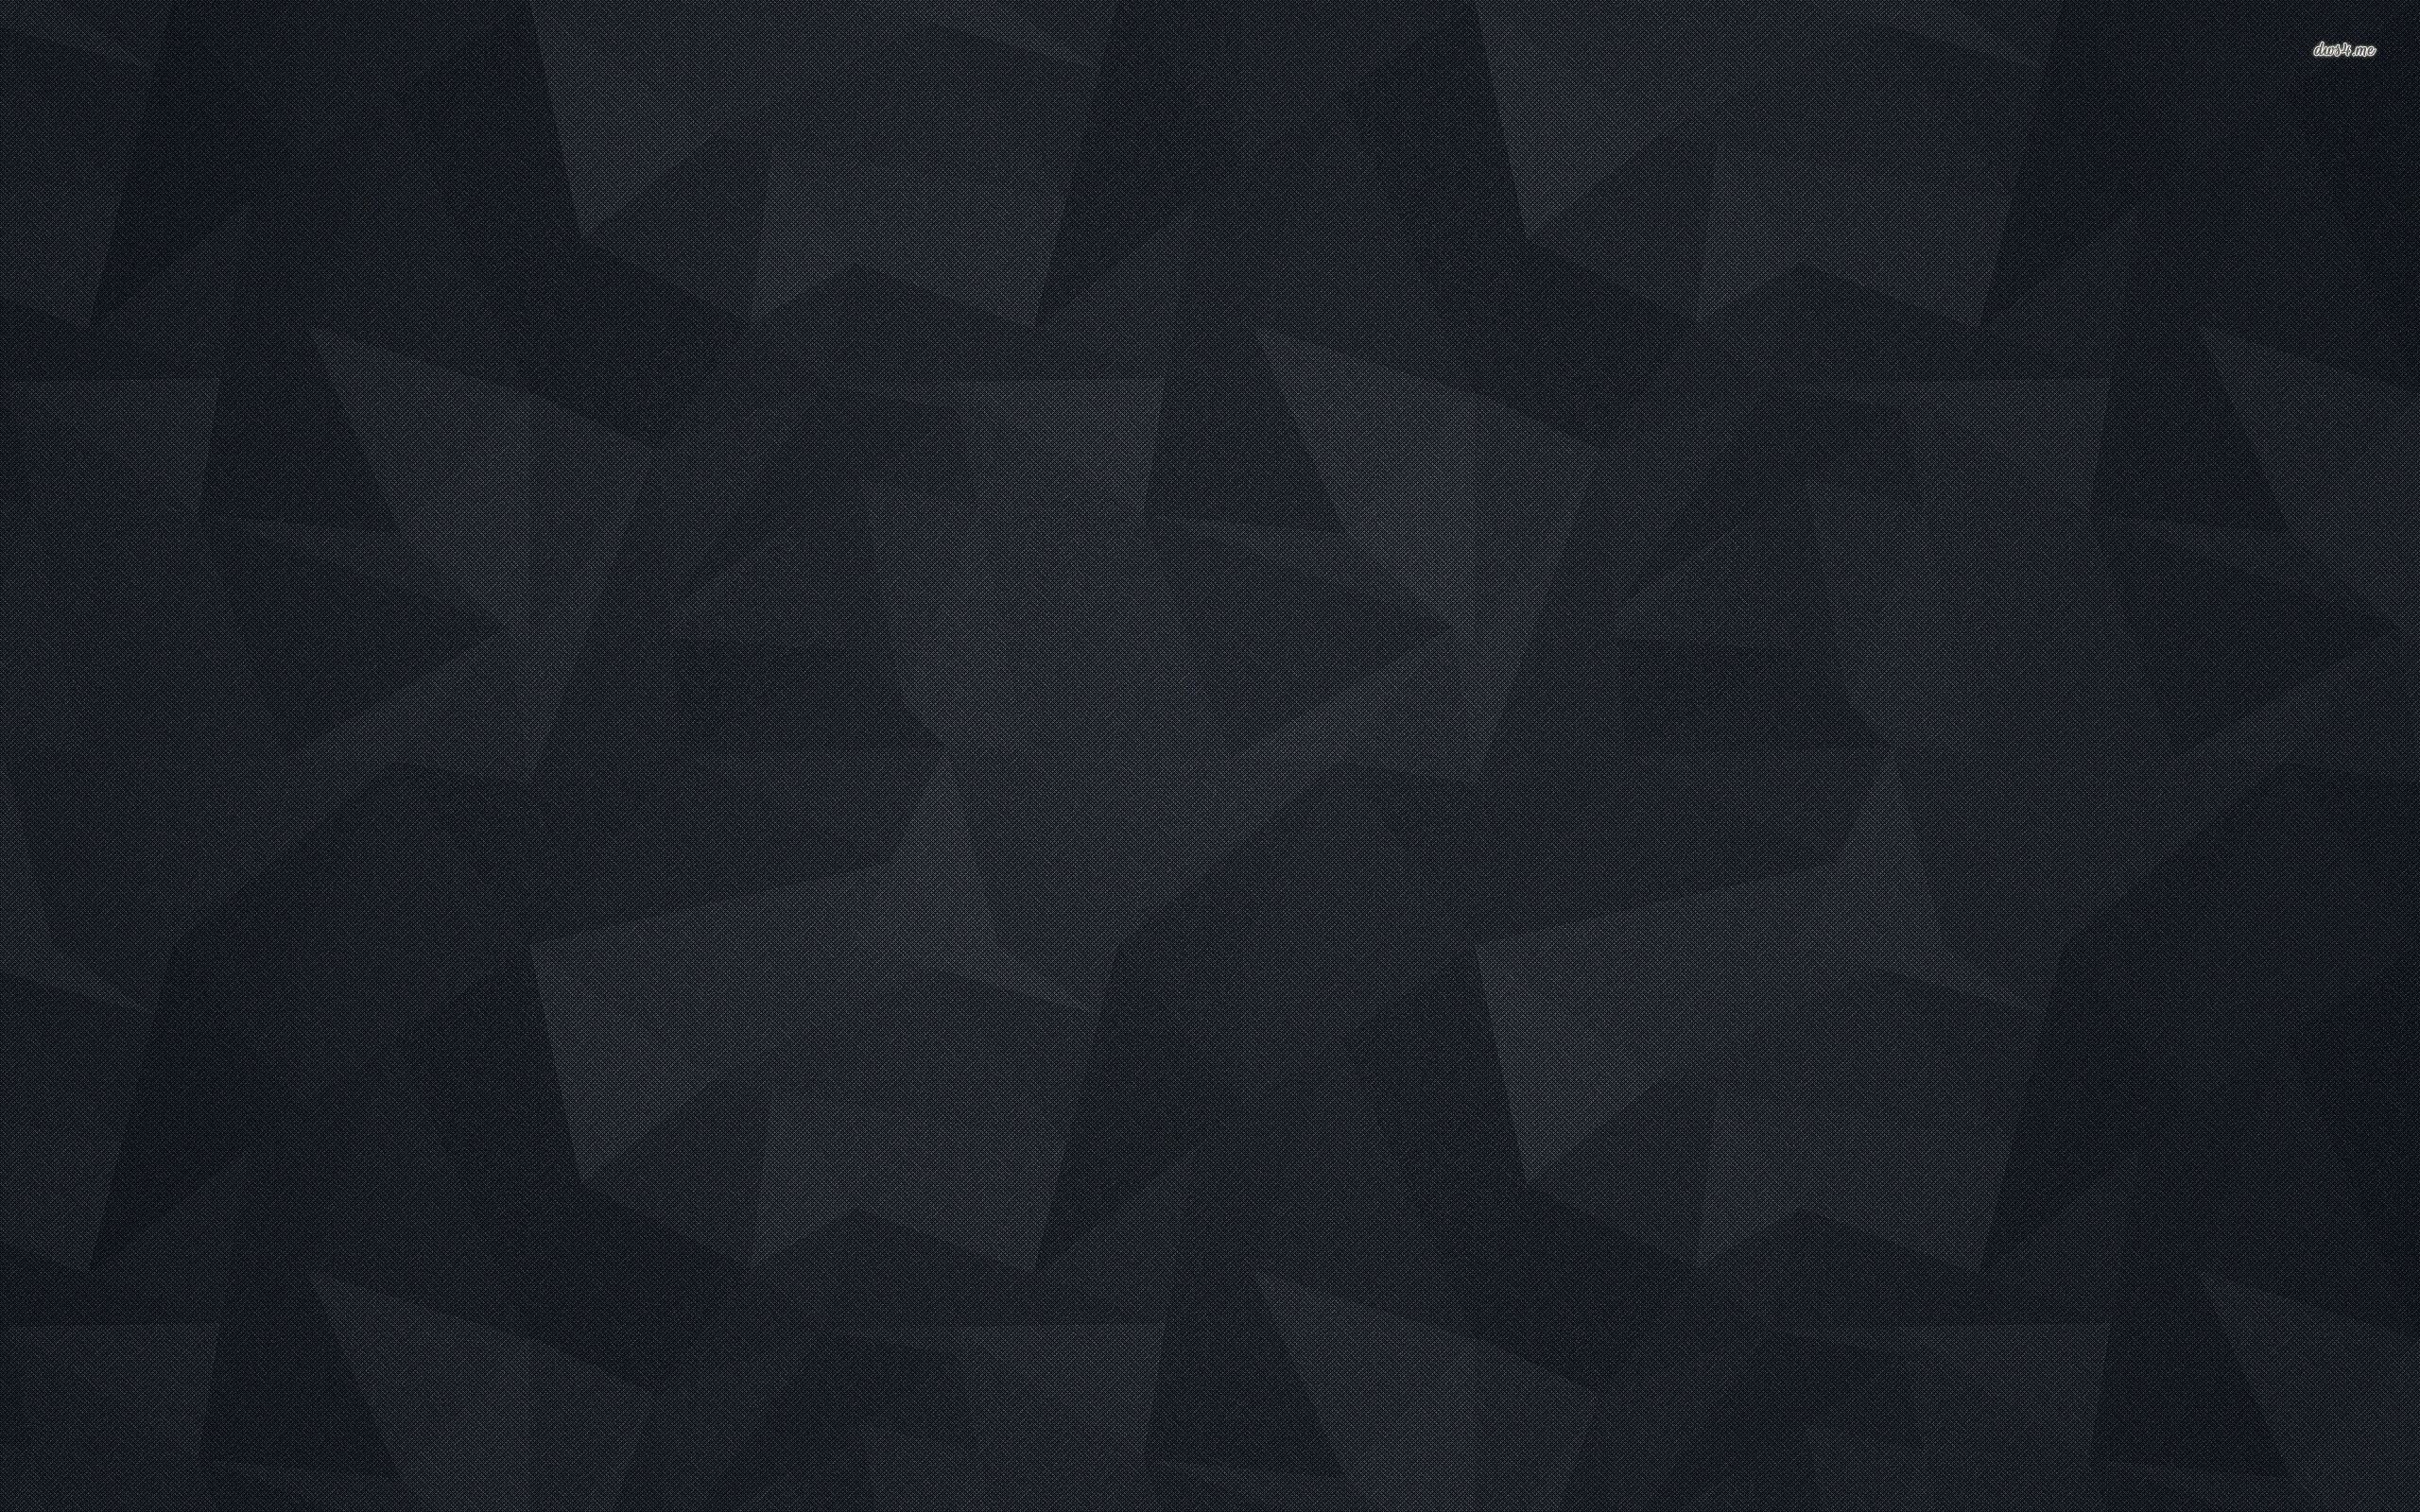 Dark grey polygon wallpaper - Abstract wallpapers - #21381